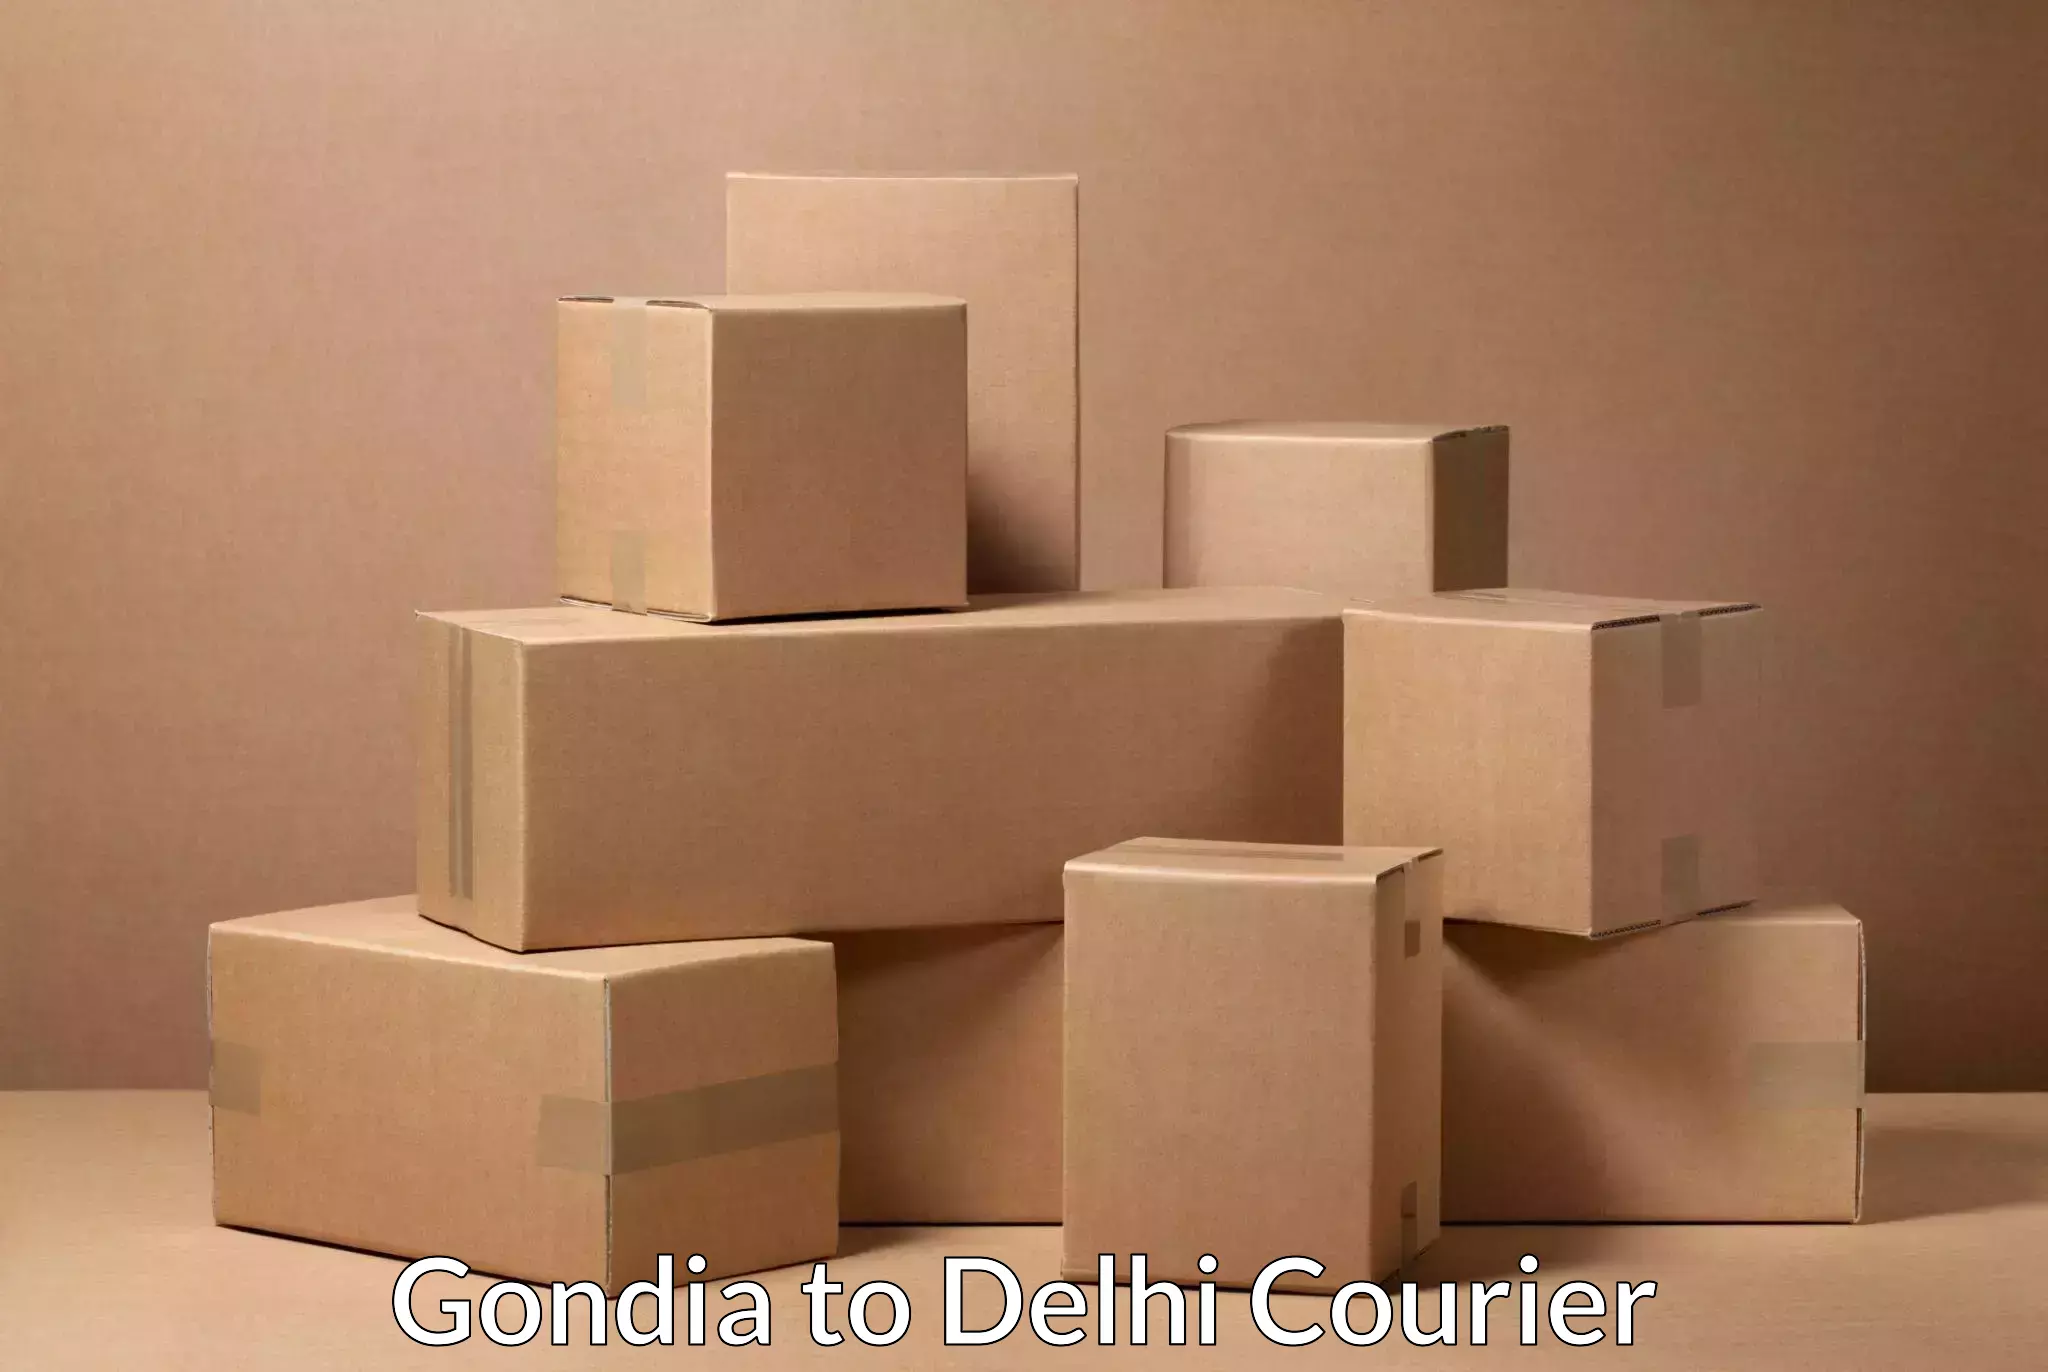 Efficient order fulfillment Gondia to Lodhi Road